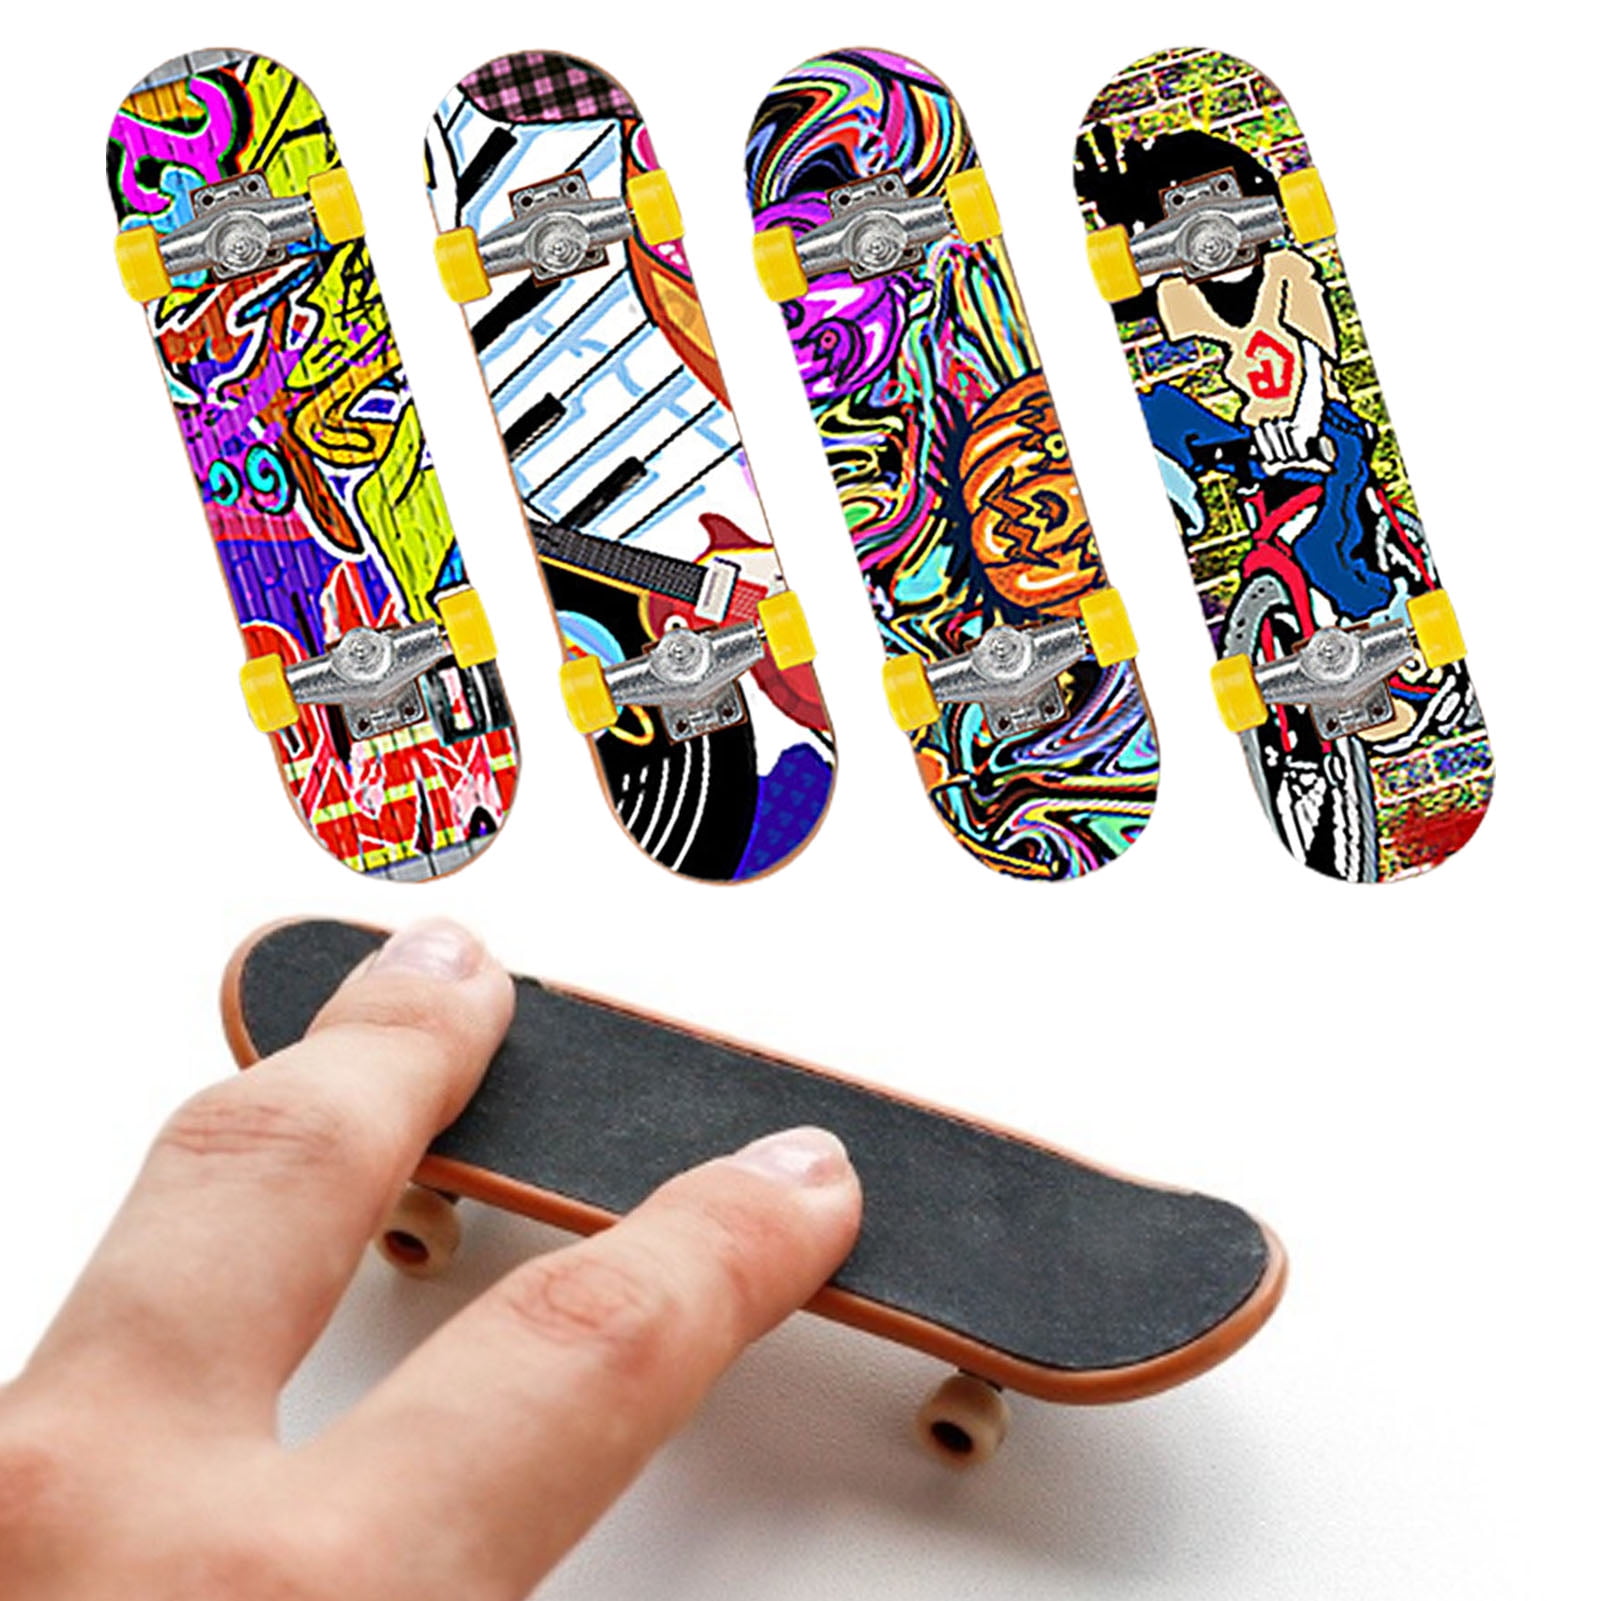 4X Mini Finger Skateboard Fingerboard Skate Board Kids Child Party Deck Toy Gift 